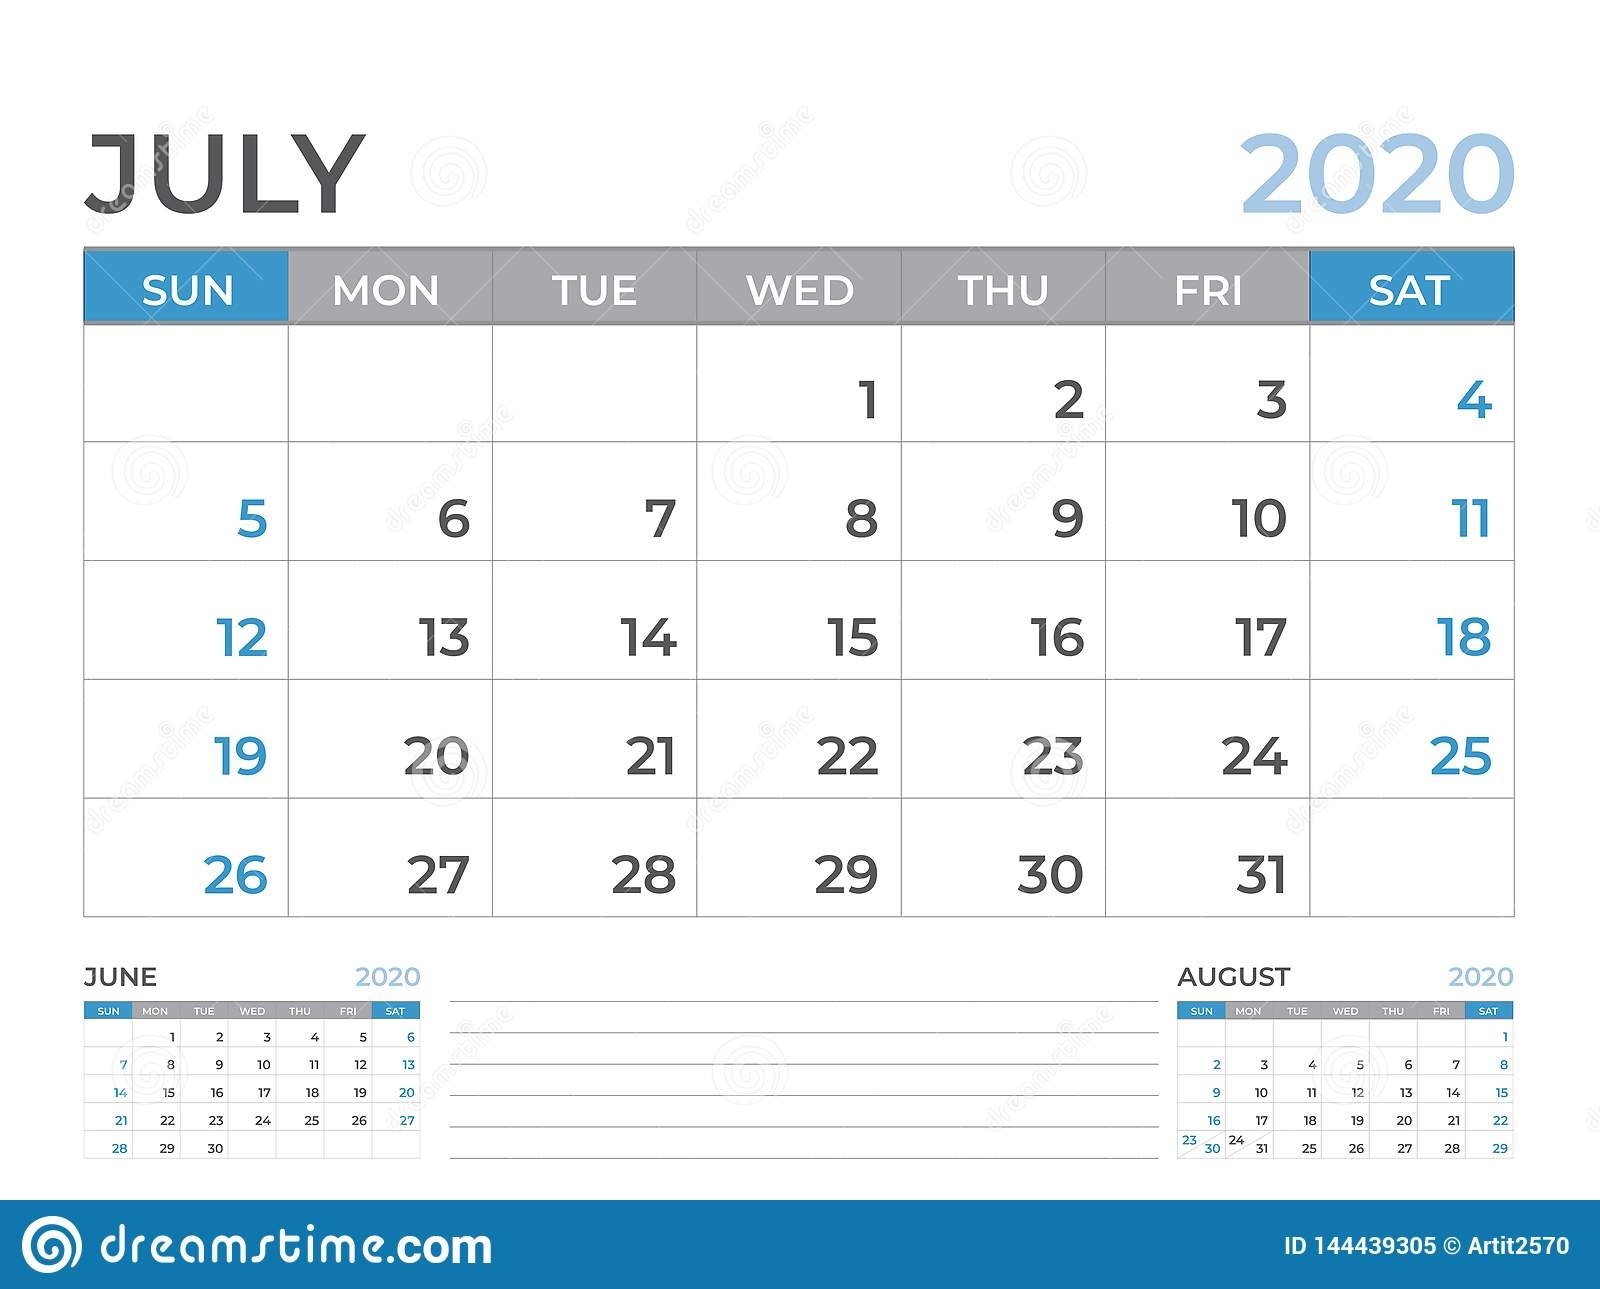 June 2020 Calendar Template, Desk Calendar Layout Size 8 X 6-2020 Calendar Templates Monday - Sunday